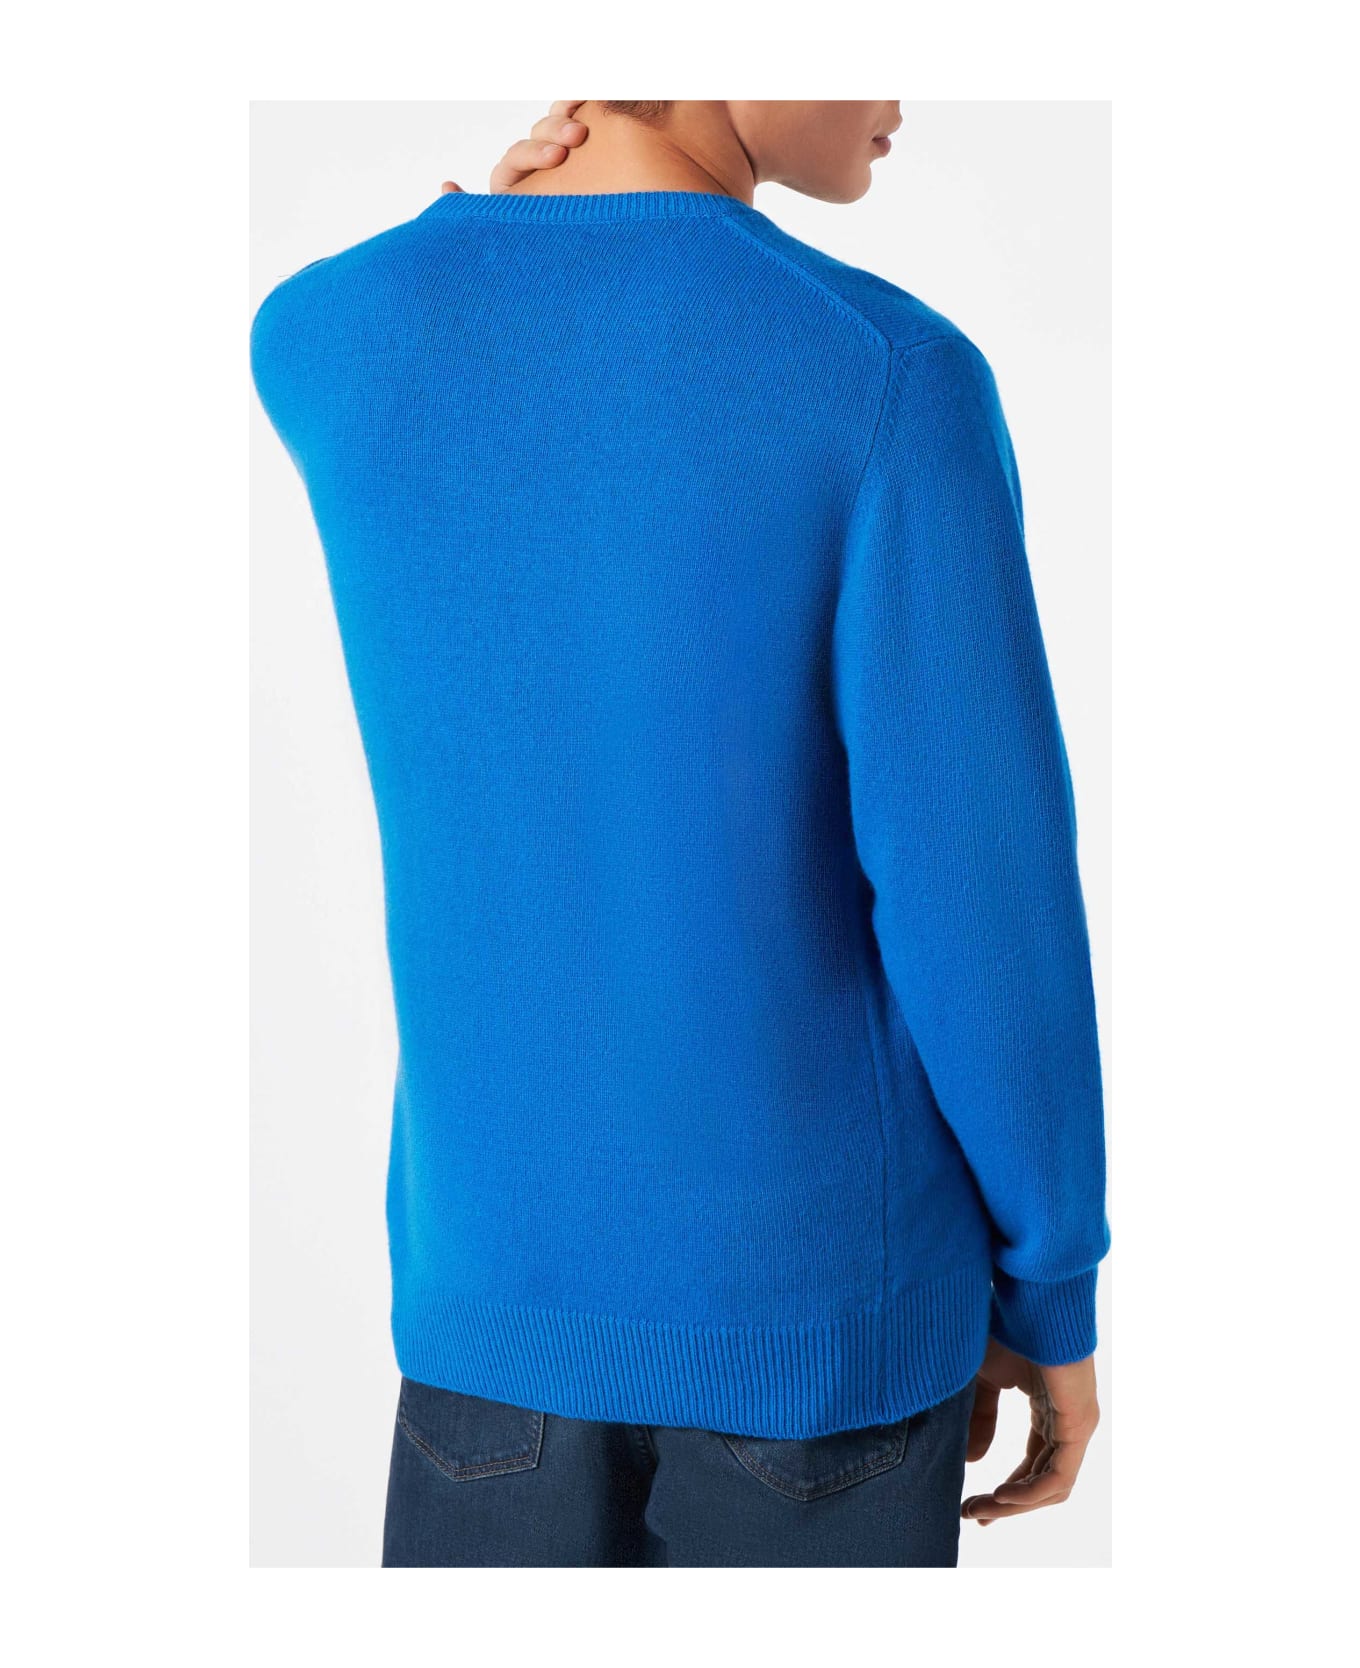 MC2 Saint Barth Man Sweater With St. Barth Padel Club Jacquard Print - BLUE ニットウェア